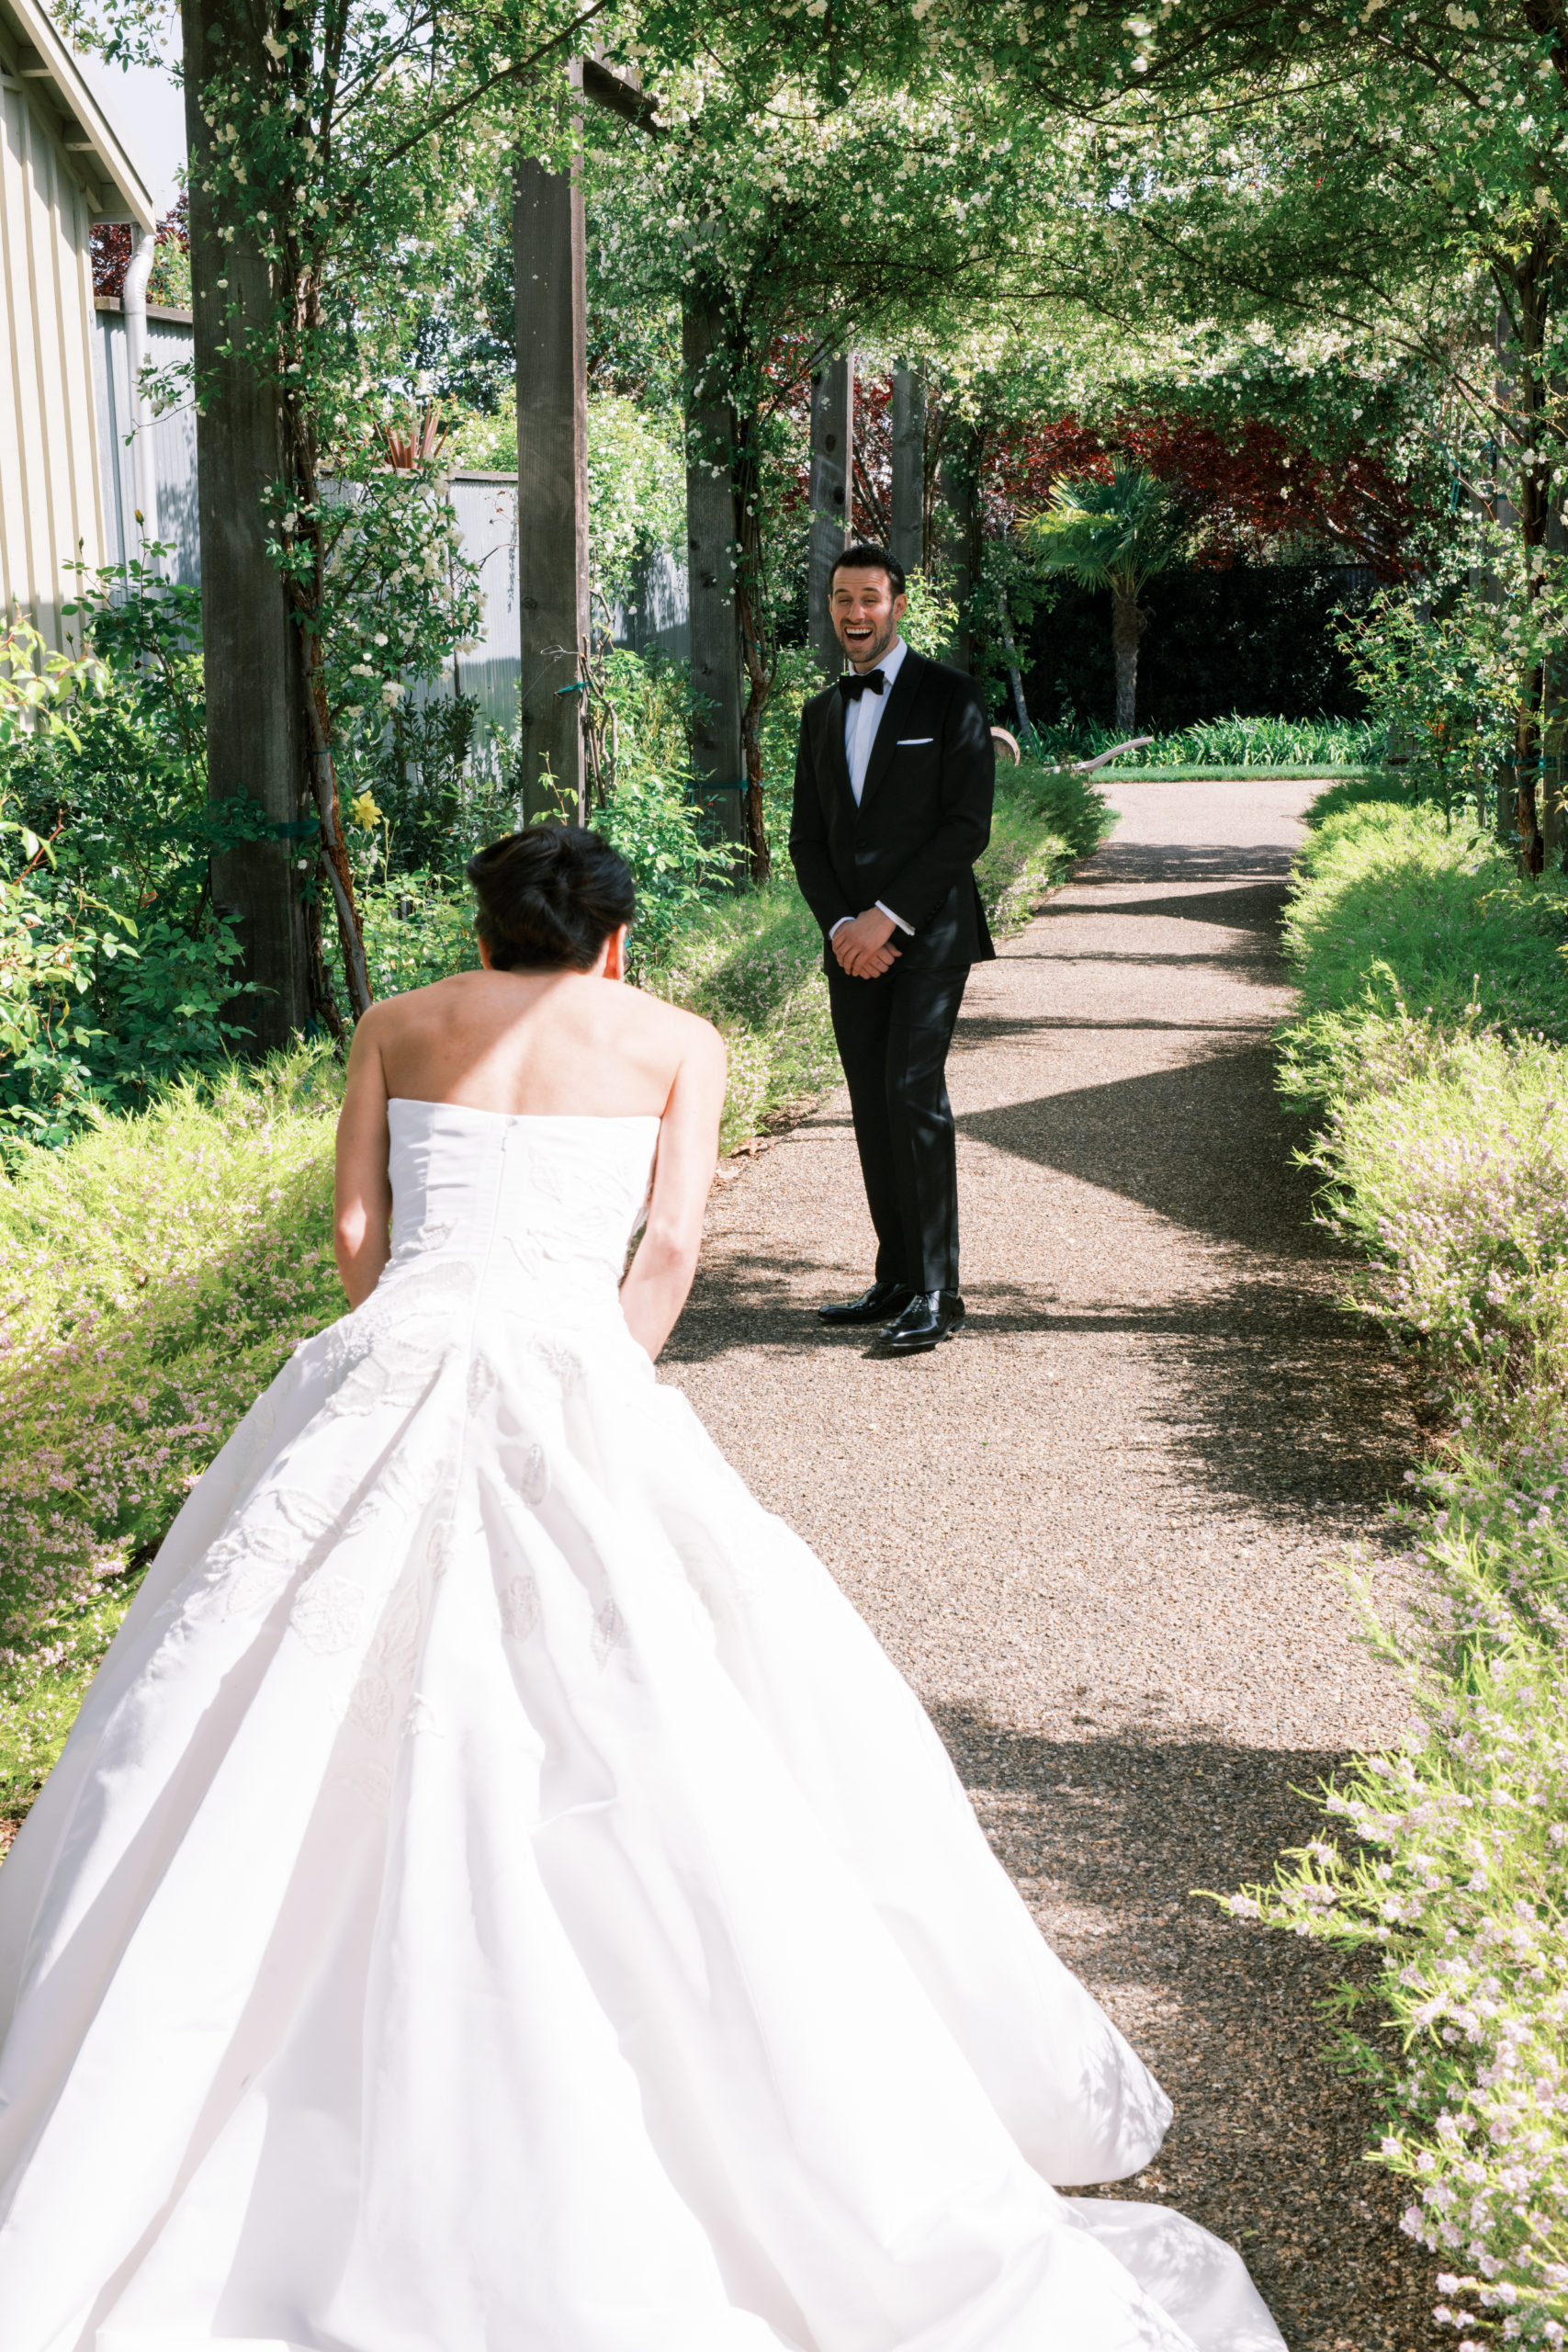 Napa Valley Wedding, Wedding at Carneros Resort and Spa, Napa Valley Wedding Photographer, Anna Gianfrate Photography